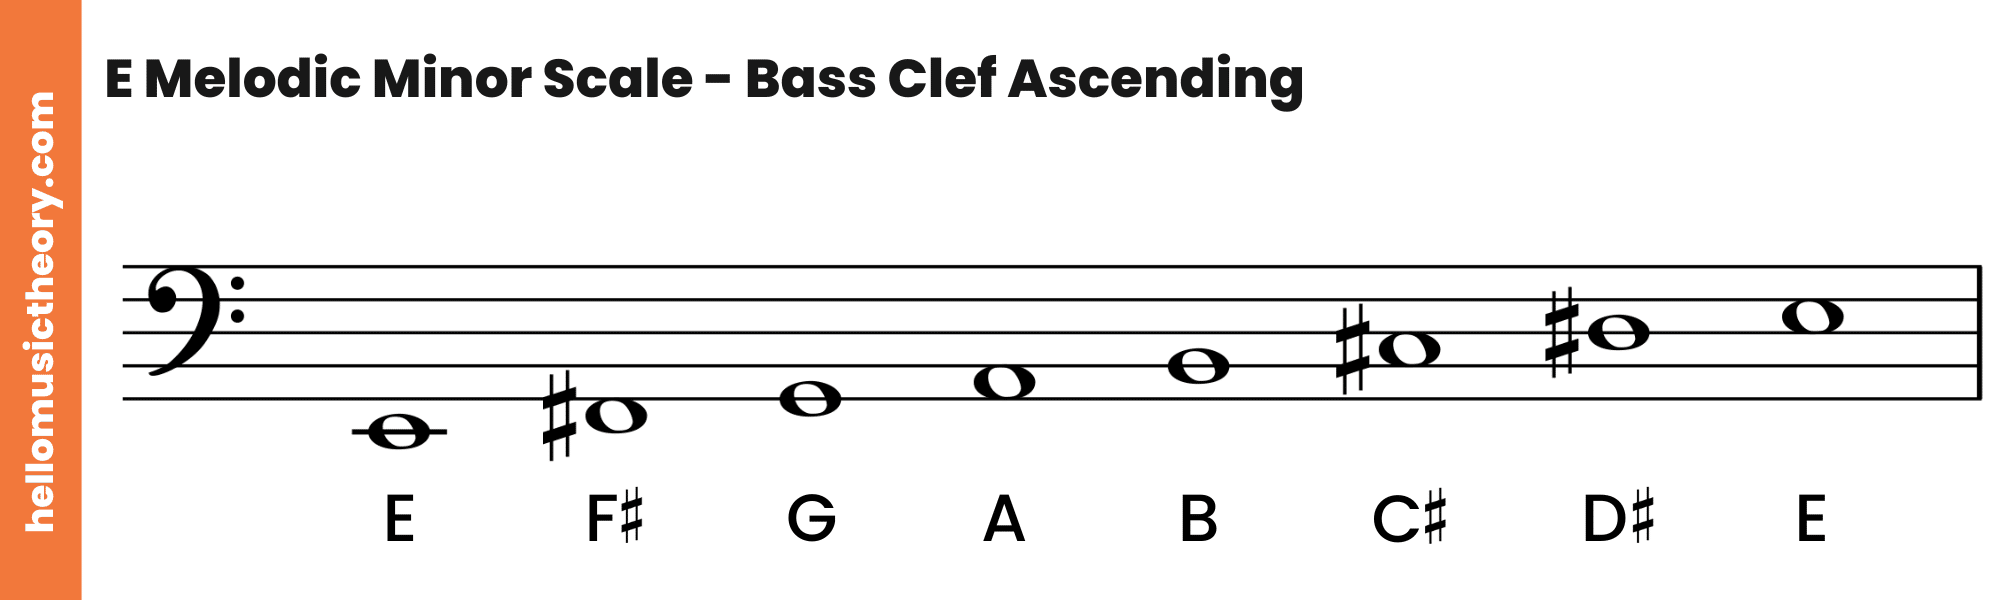 E Melodic Minor Scale Bass Clef Ascending